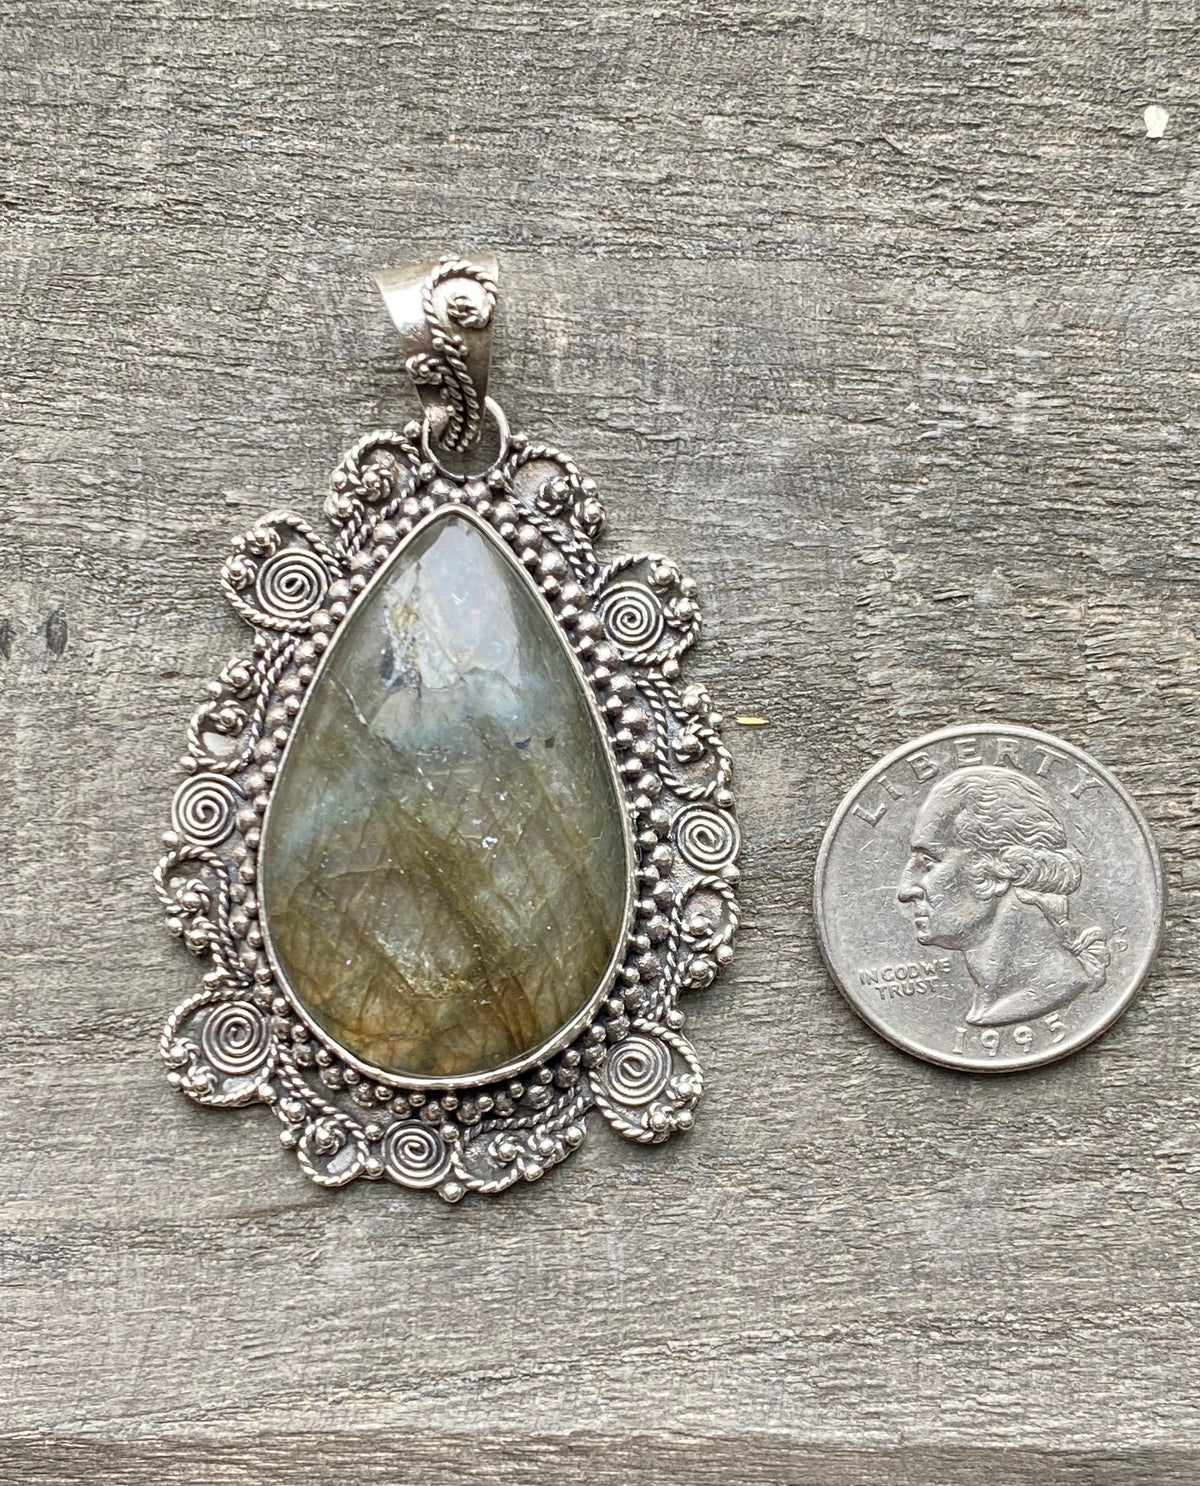 Labradorite 925 Sterling Silver Pendant Handmade Sterling Silver Jewelry - Crystal Healing, Meditation